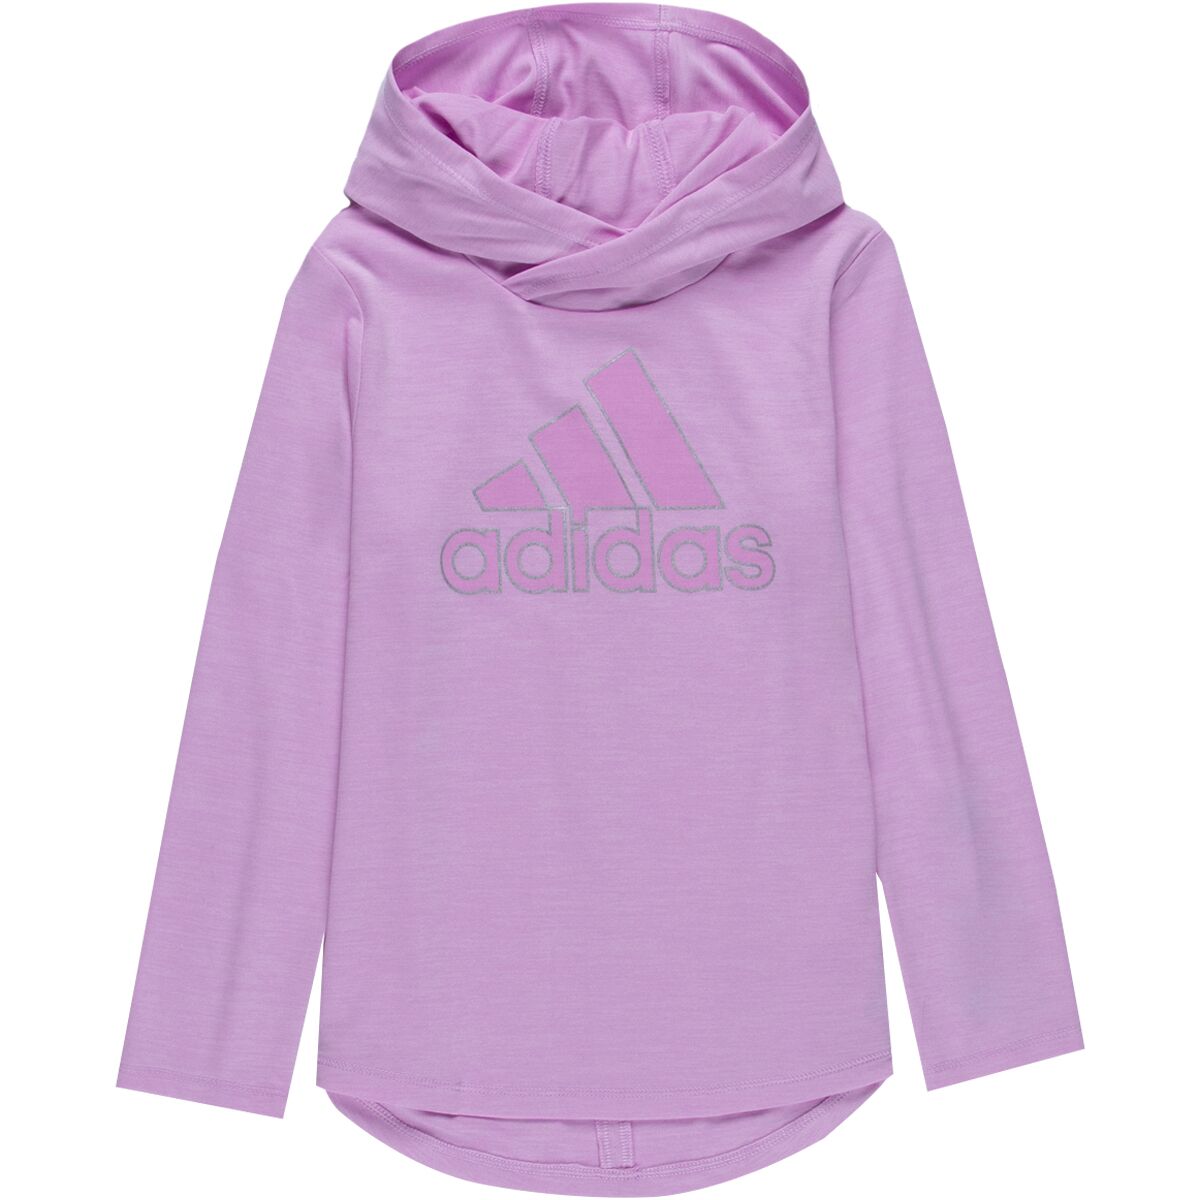 Adidas Melange Hooded Top - Girls'